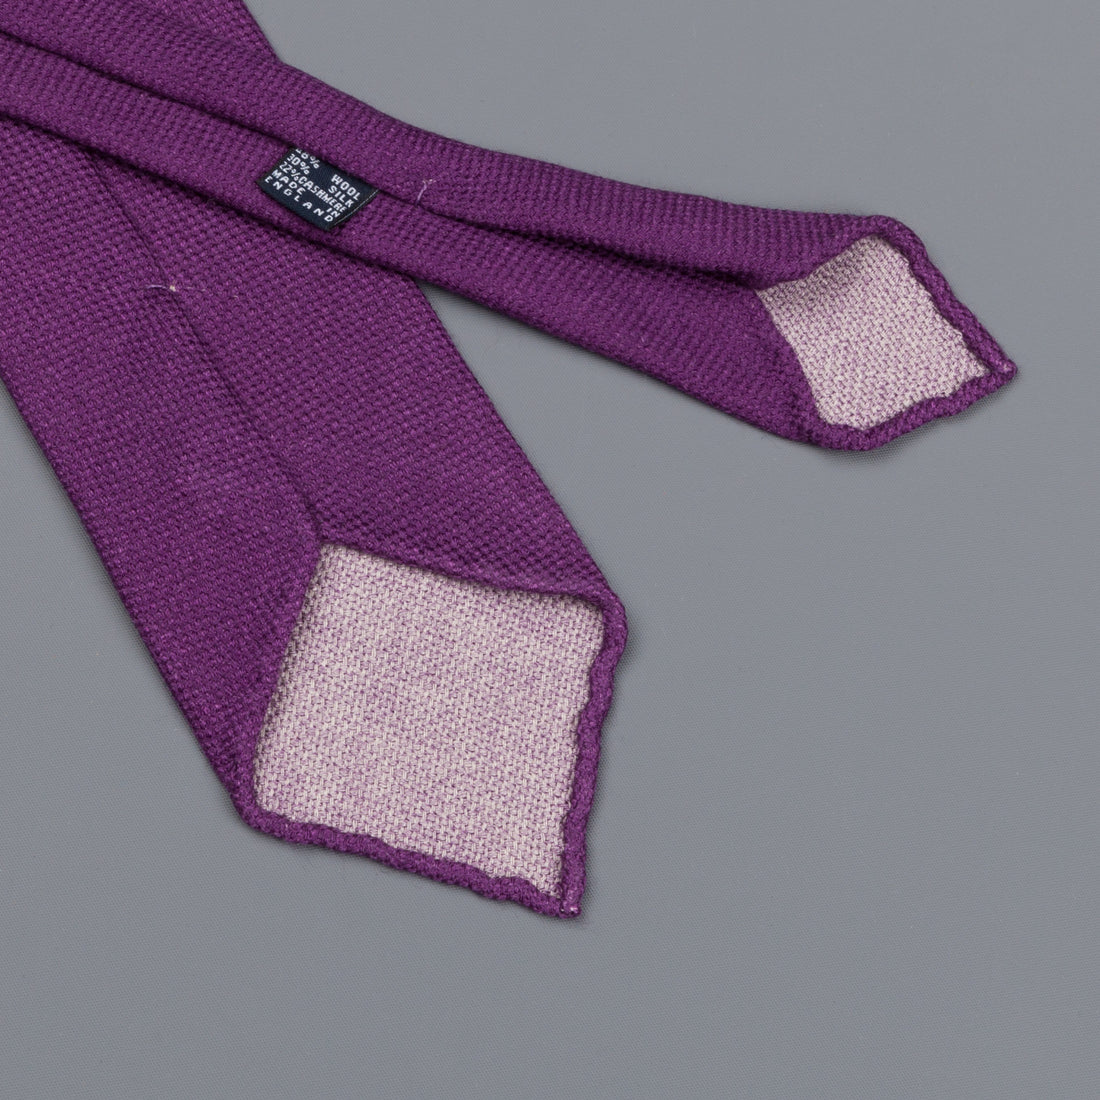 Drake's untipped tie wool/cashmere/silk blend violet